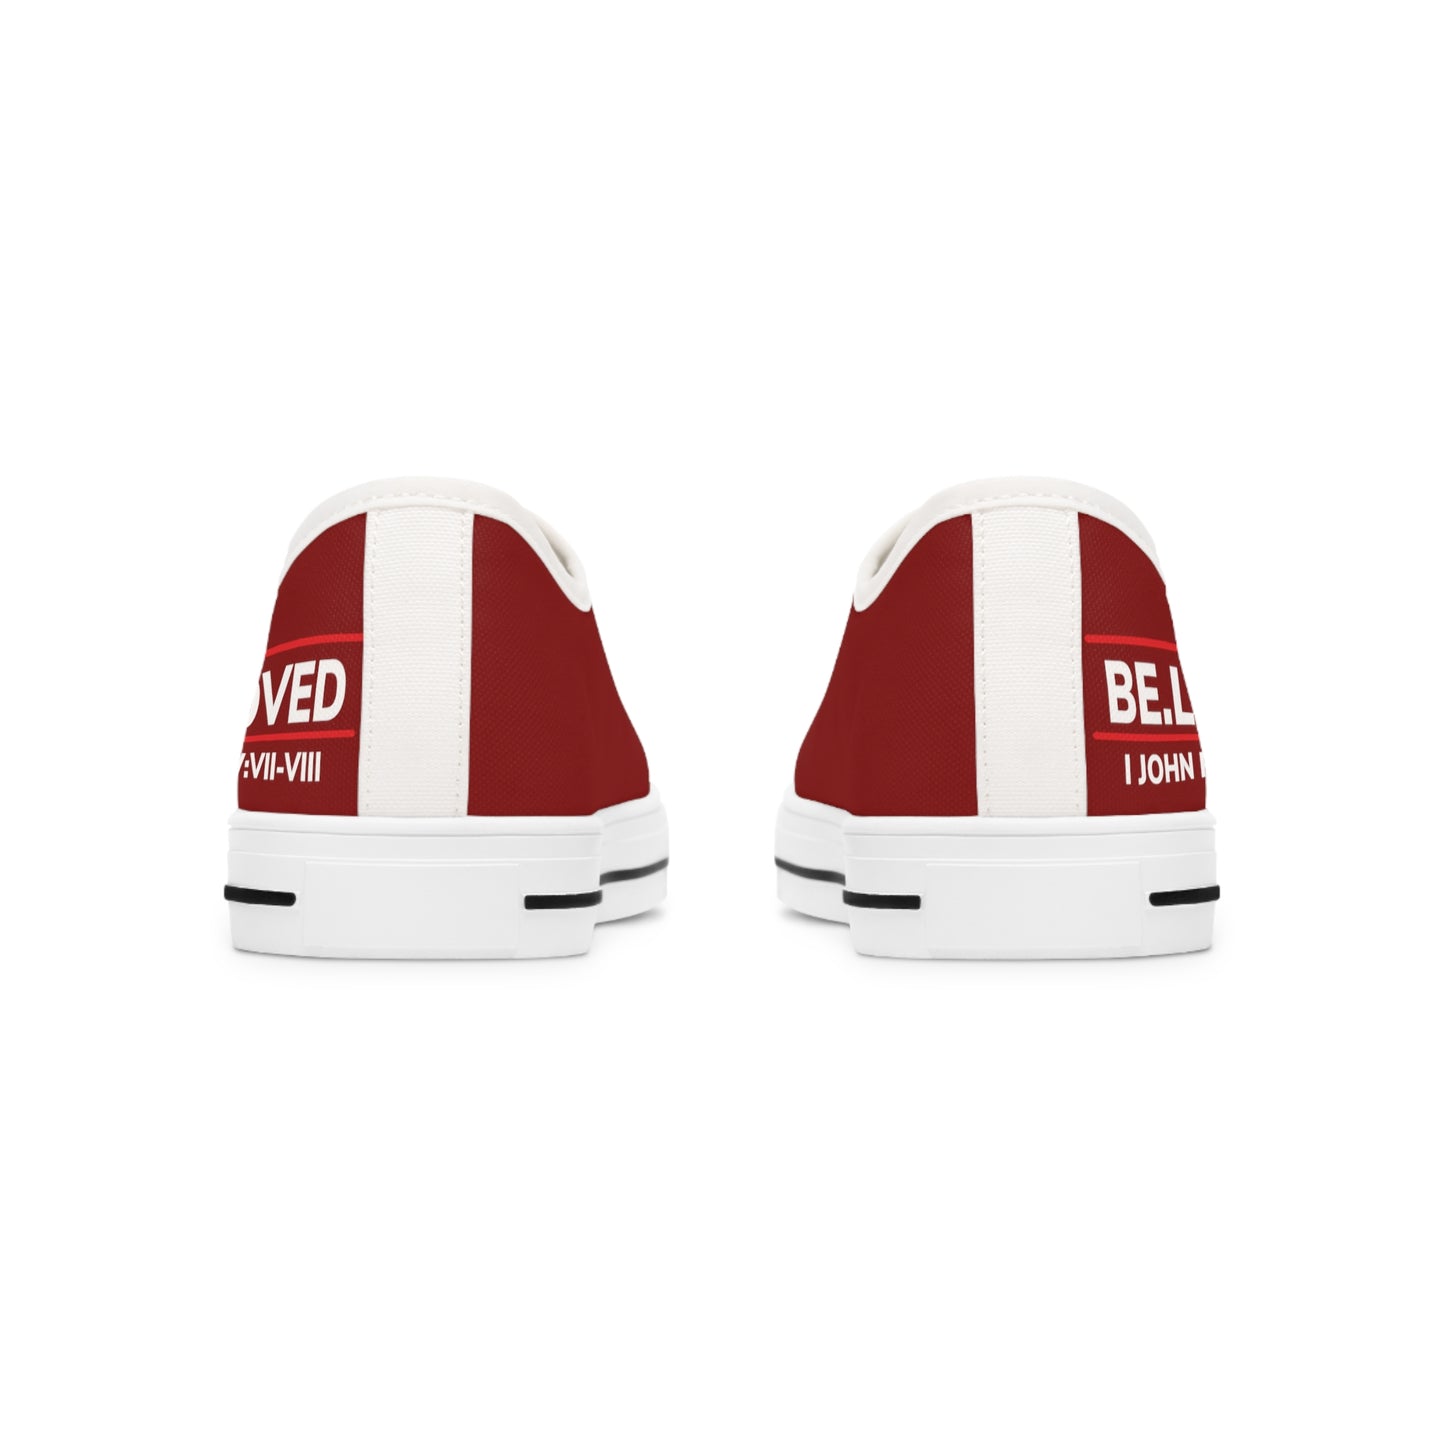 BE.LOVED Deep Red Women's Low Top Sneakers